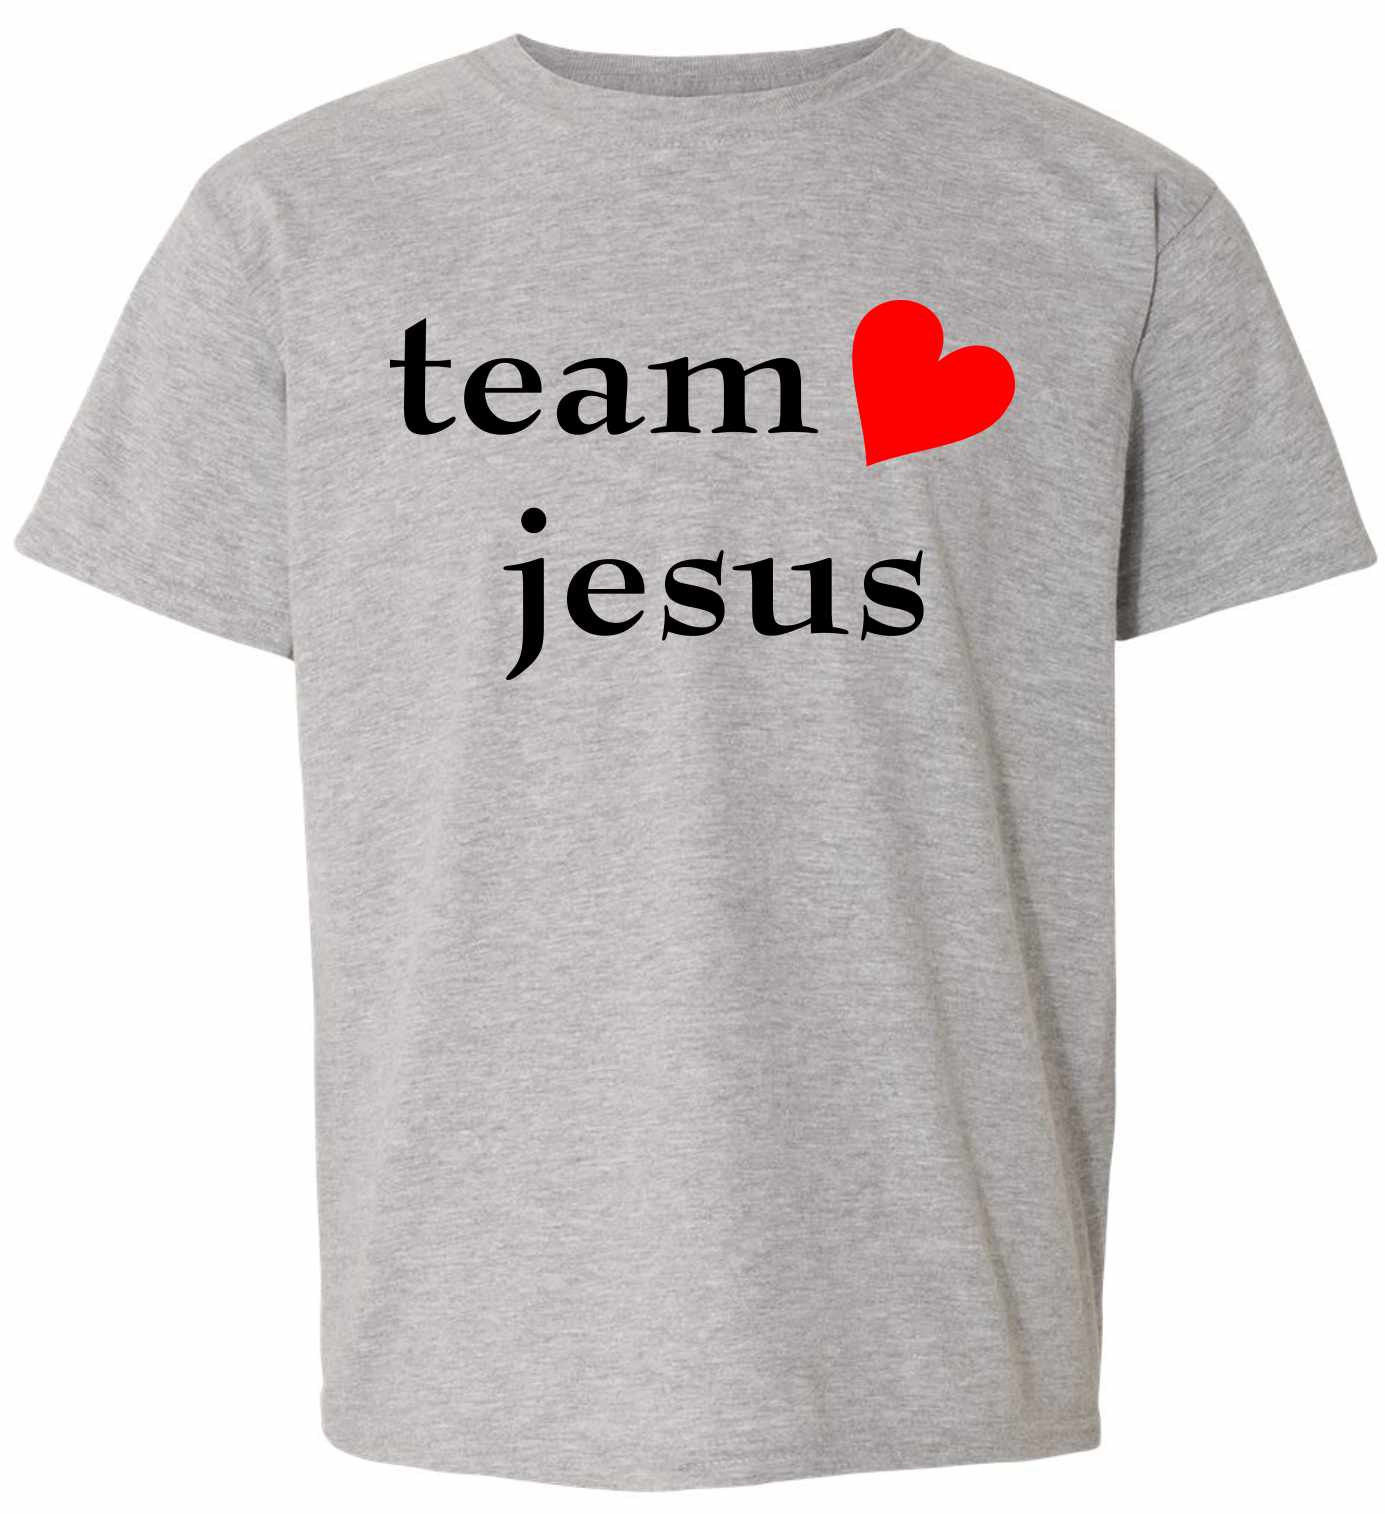 Team Jesus (heart) on Kids T-Shirt